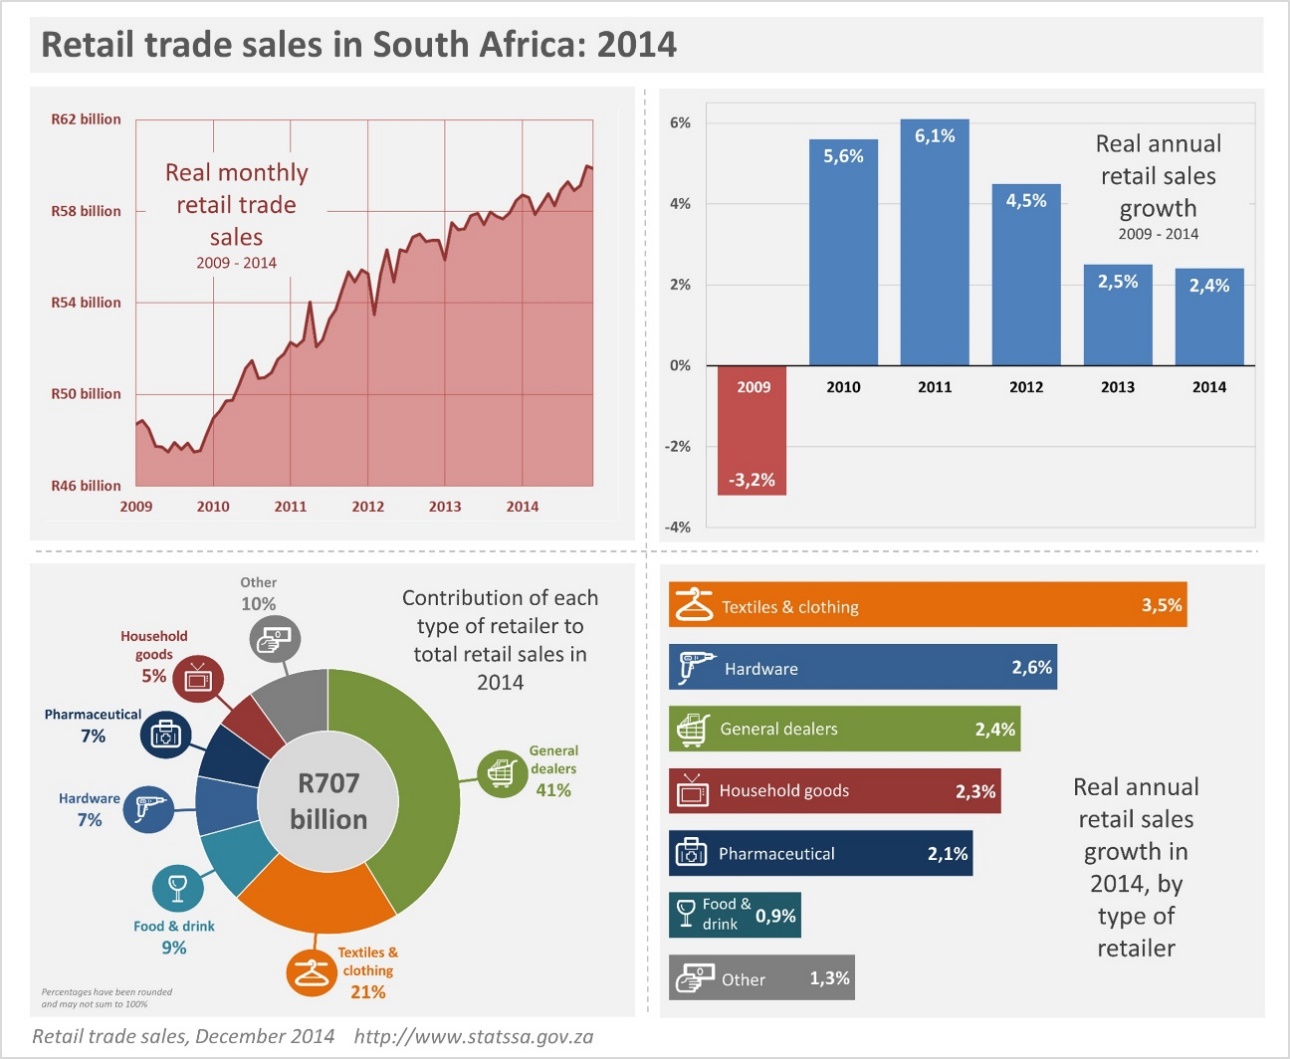 http://www.statssa.gov.za/wp-content/uploads/2015/02/retail-infographic_final.jpg